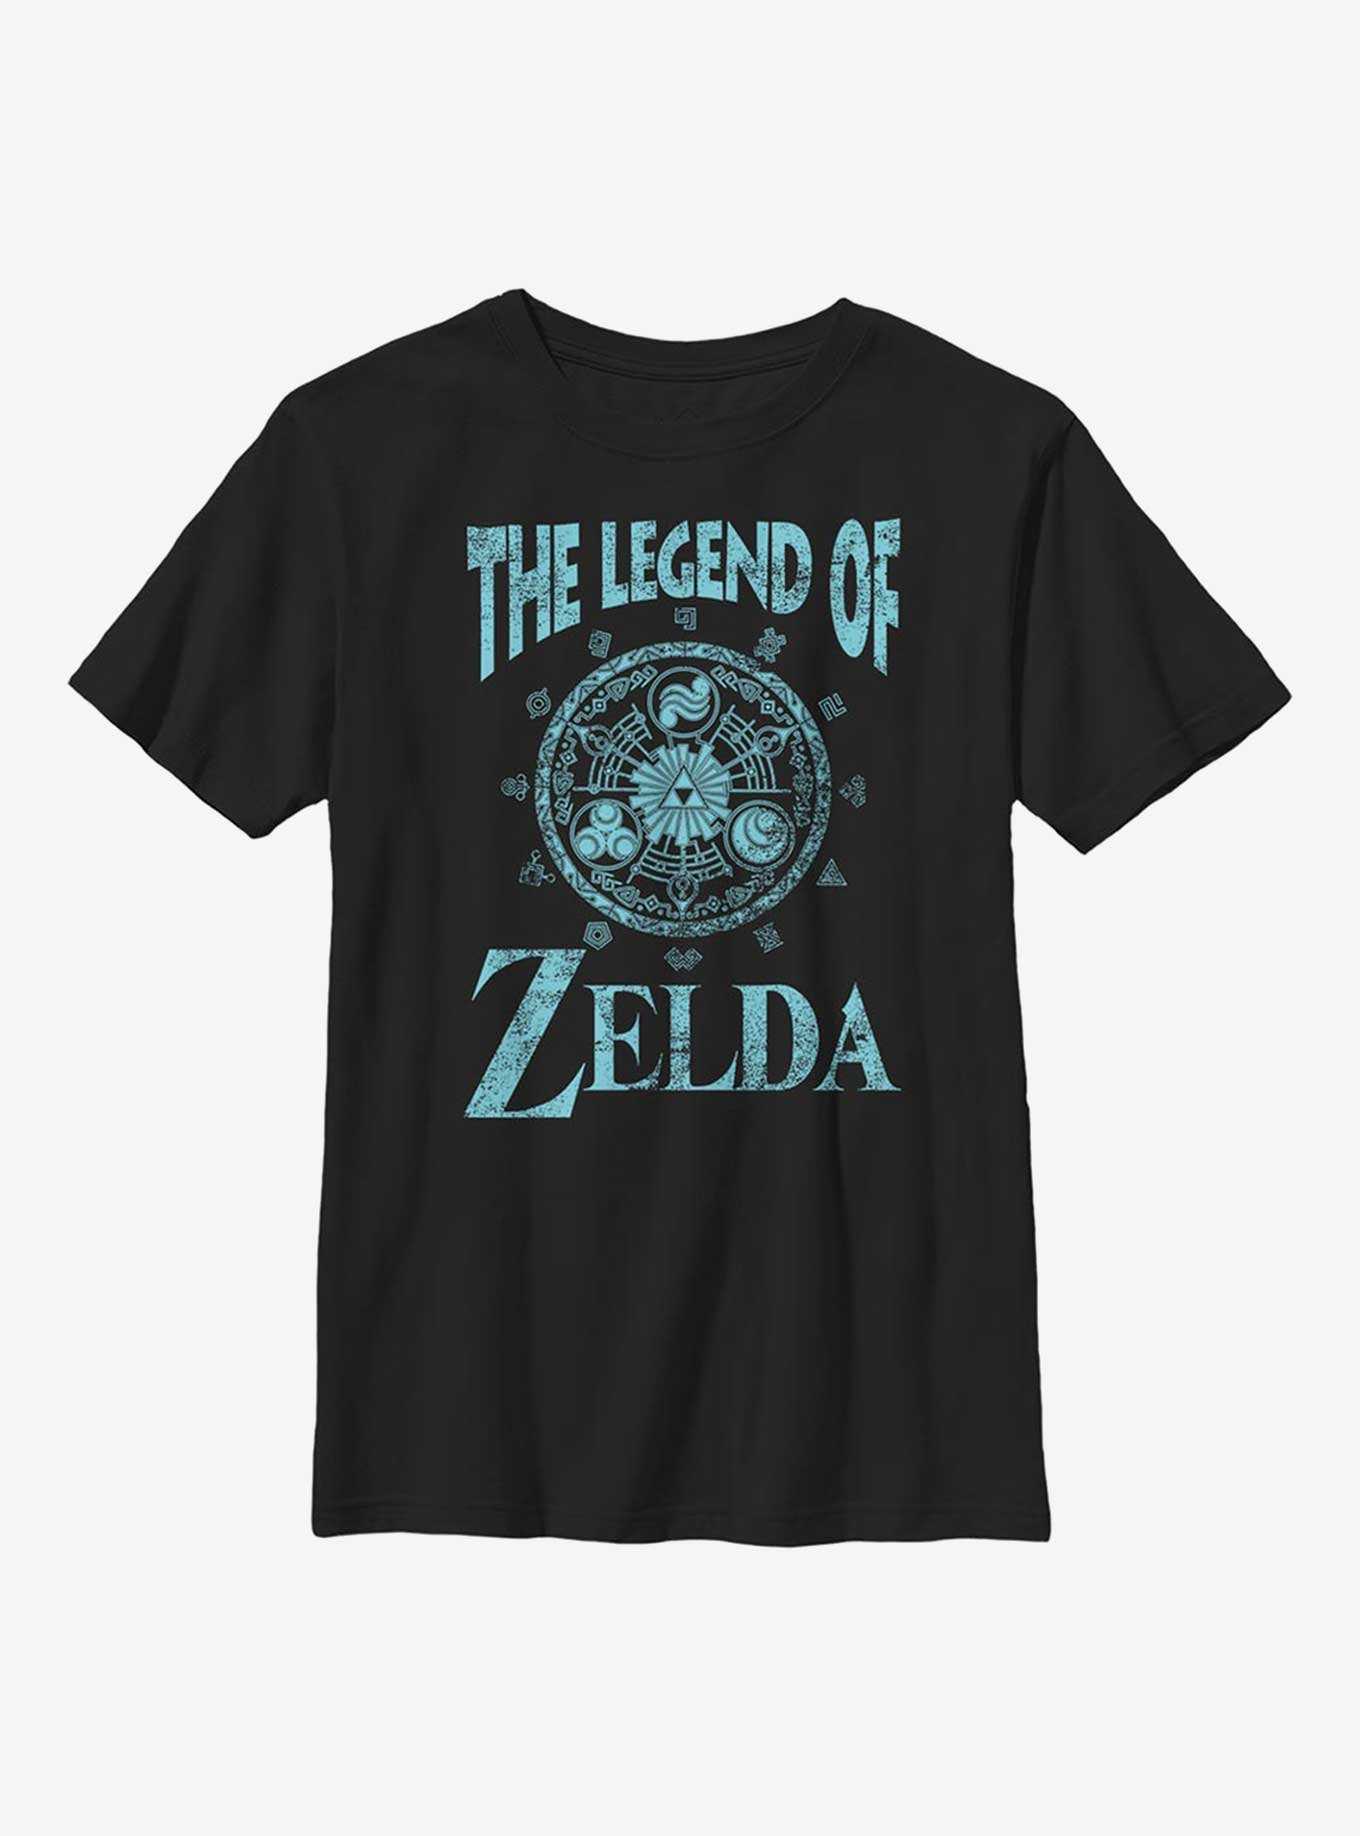 Nintendo The Legend Of Zelda Elements Youth T-Shirt, , hi-res